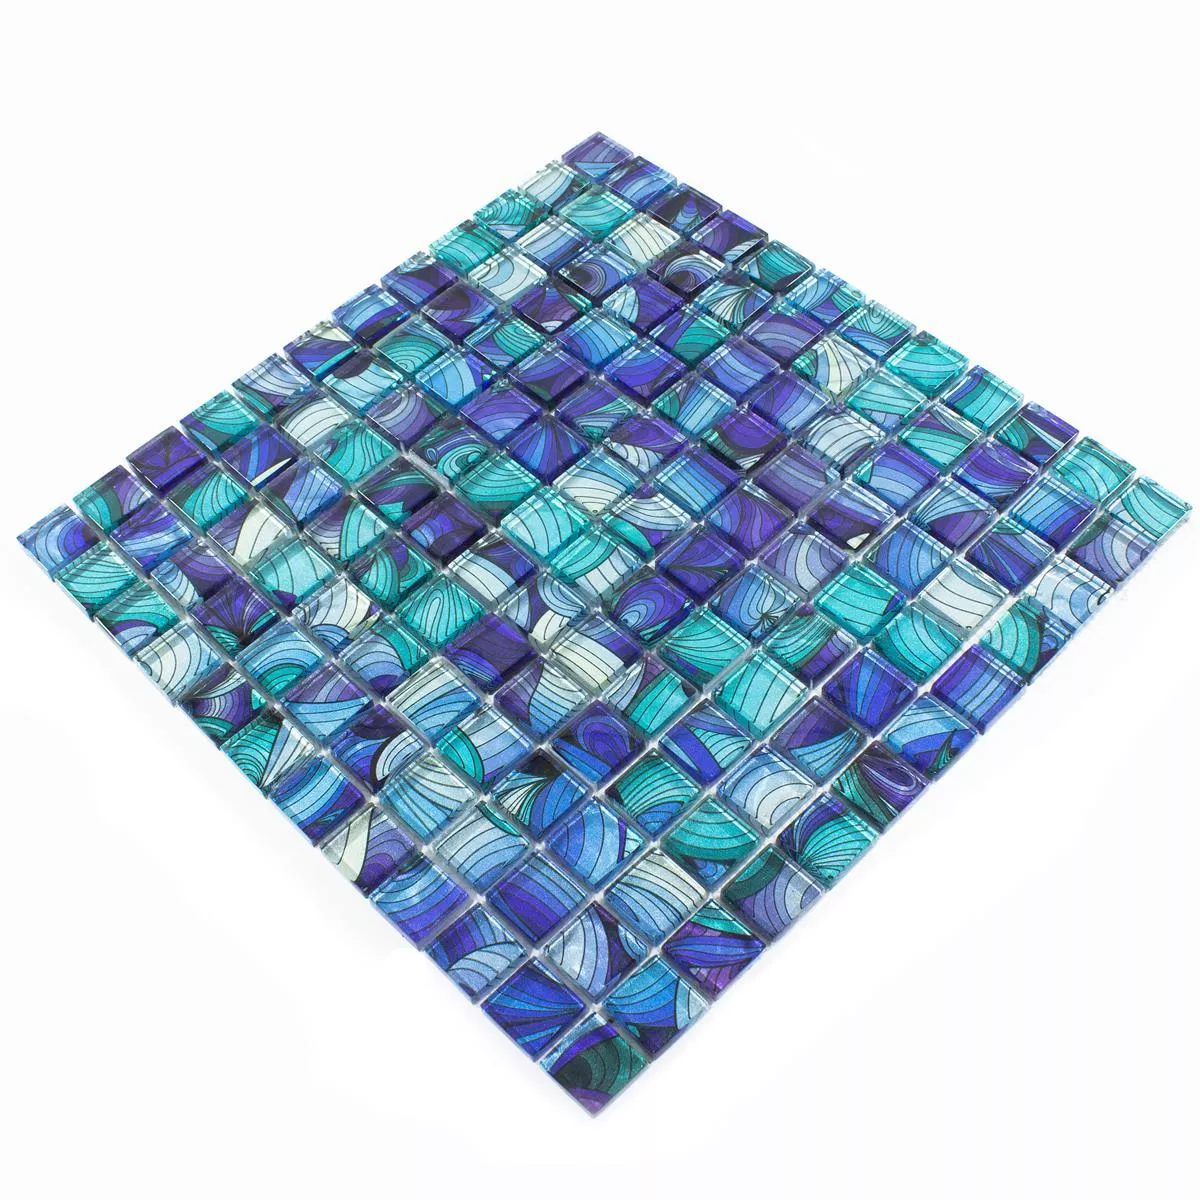 Muestra Mosaico de Cristal Azulejos Atlantis Azul Turquesa